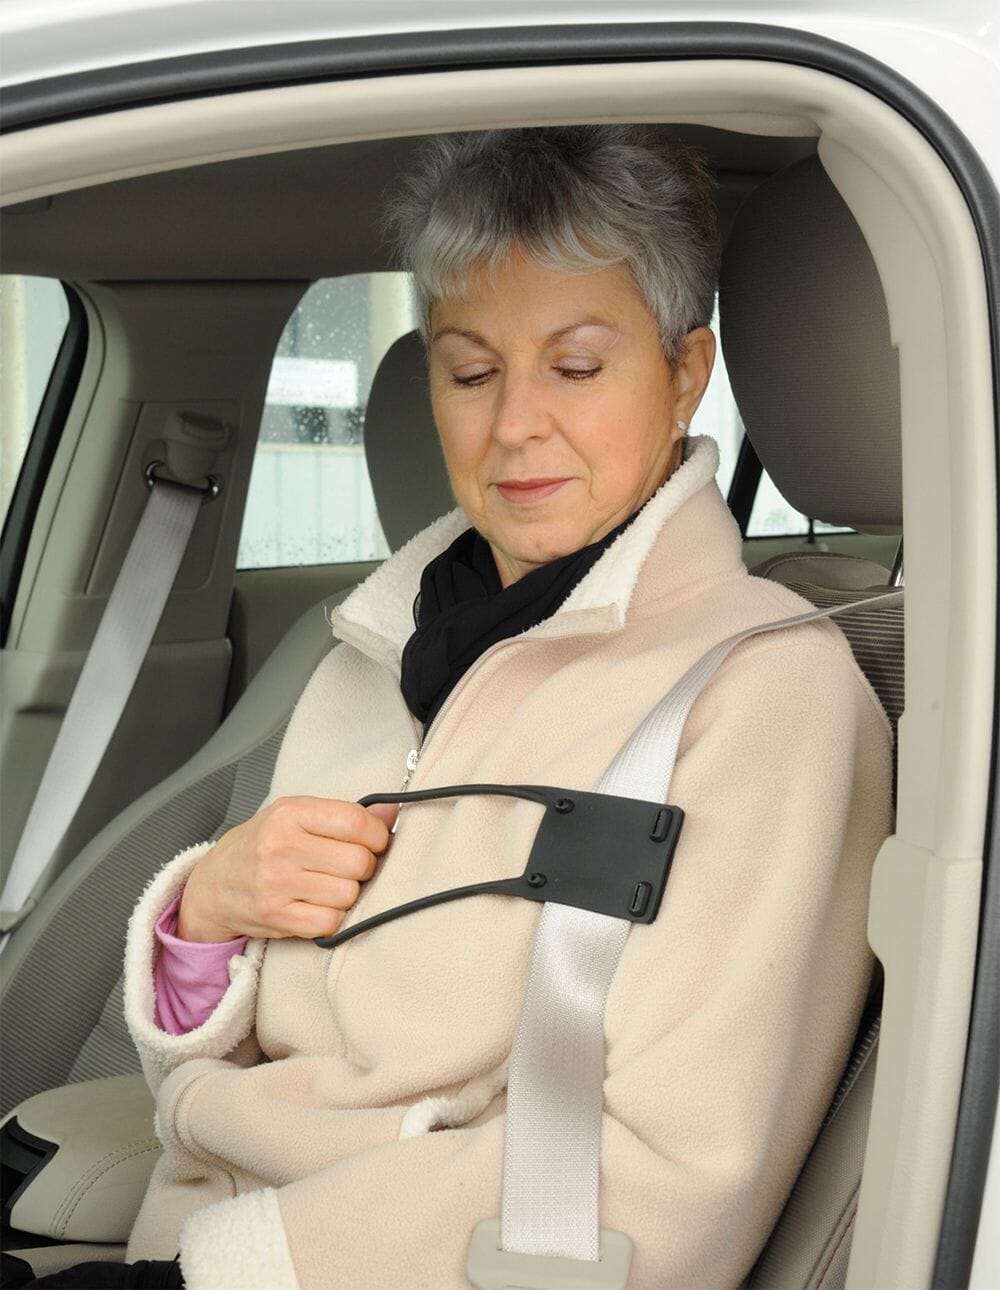 View Seat Belt Reacher information